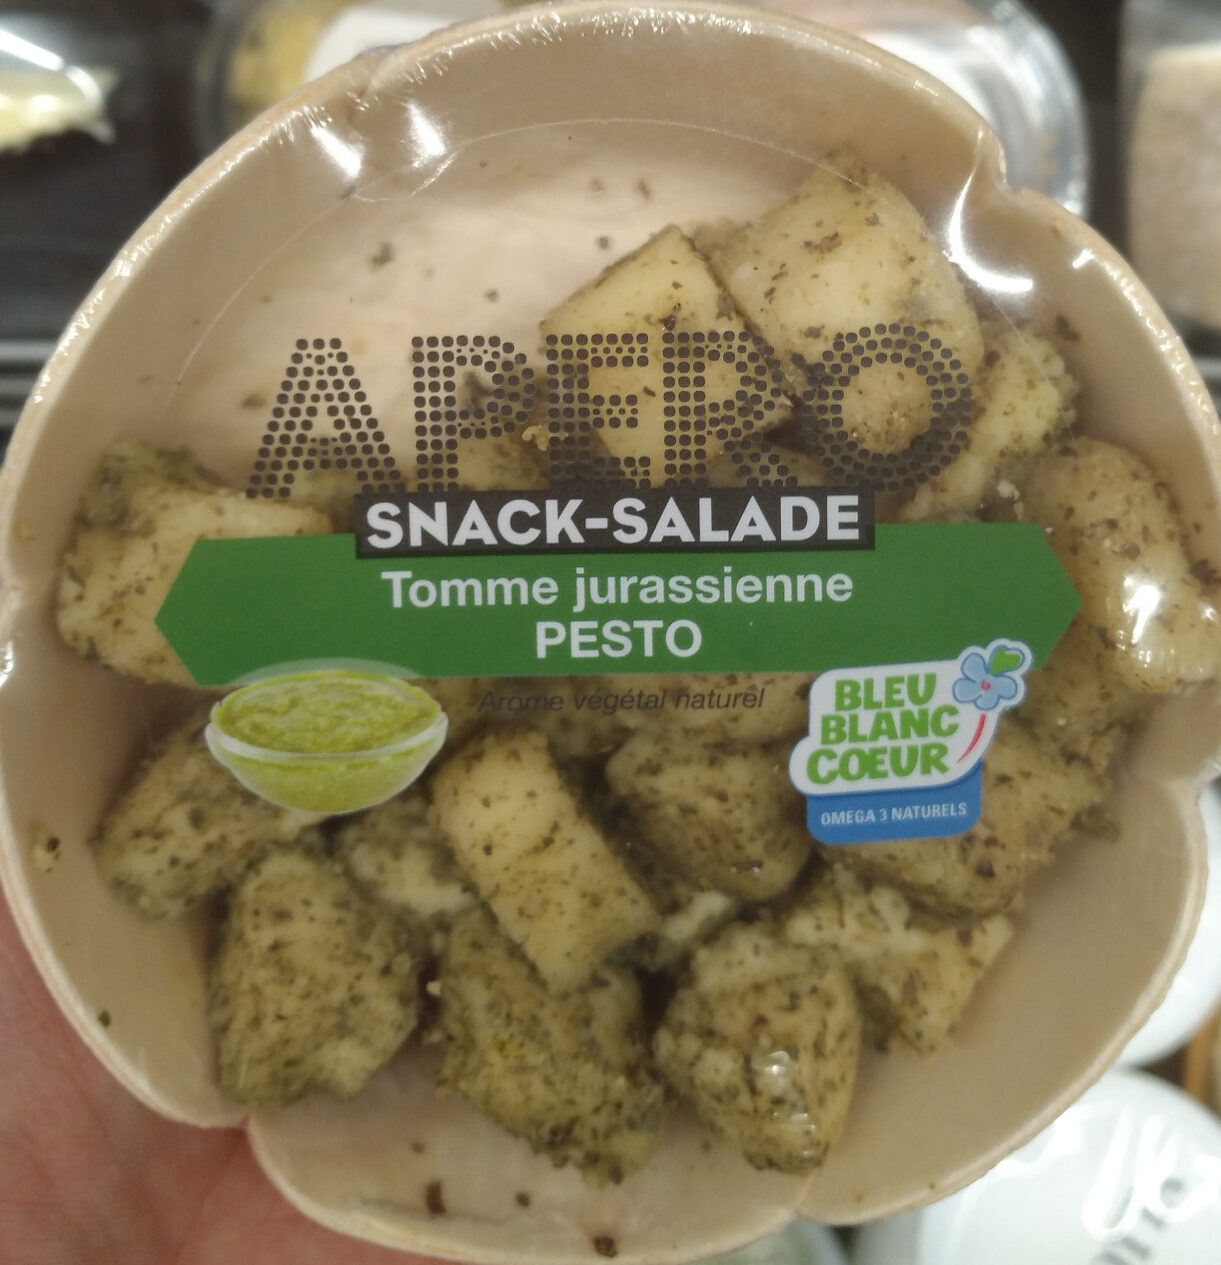 Apero snack salade tomme jurassienne pesto - Produit